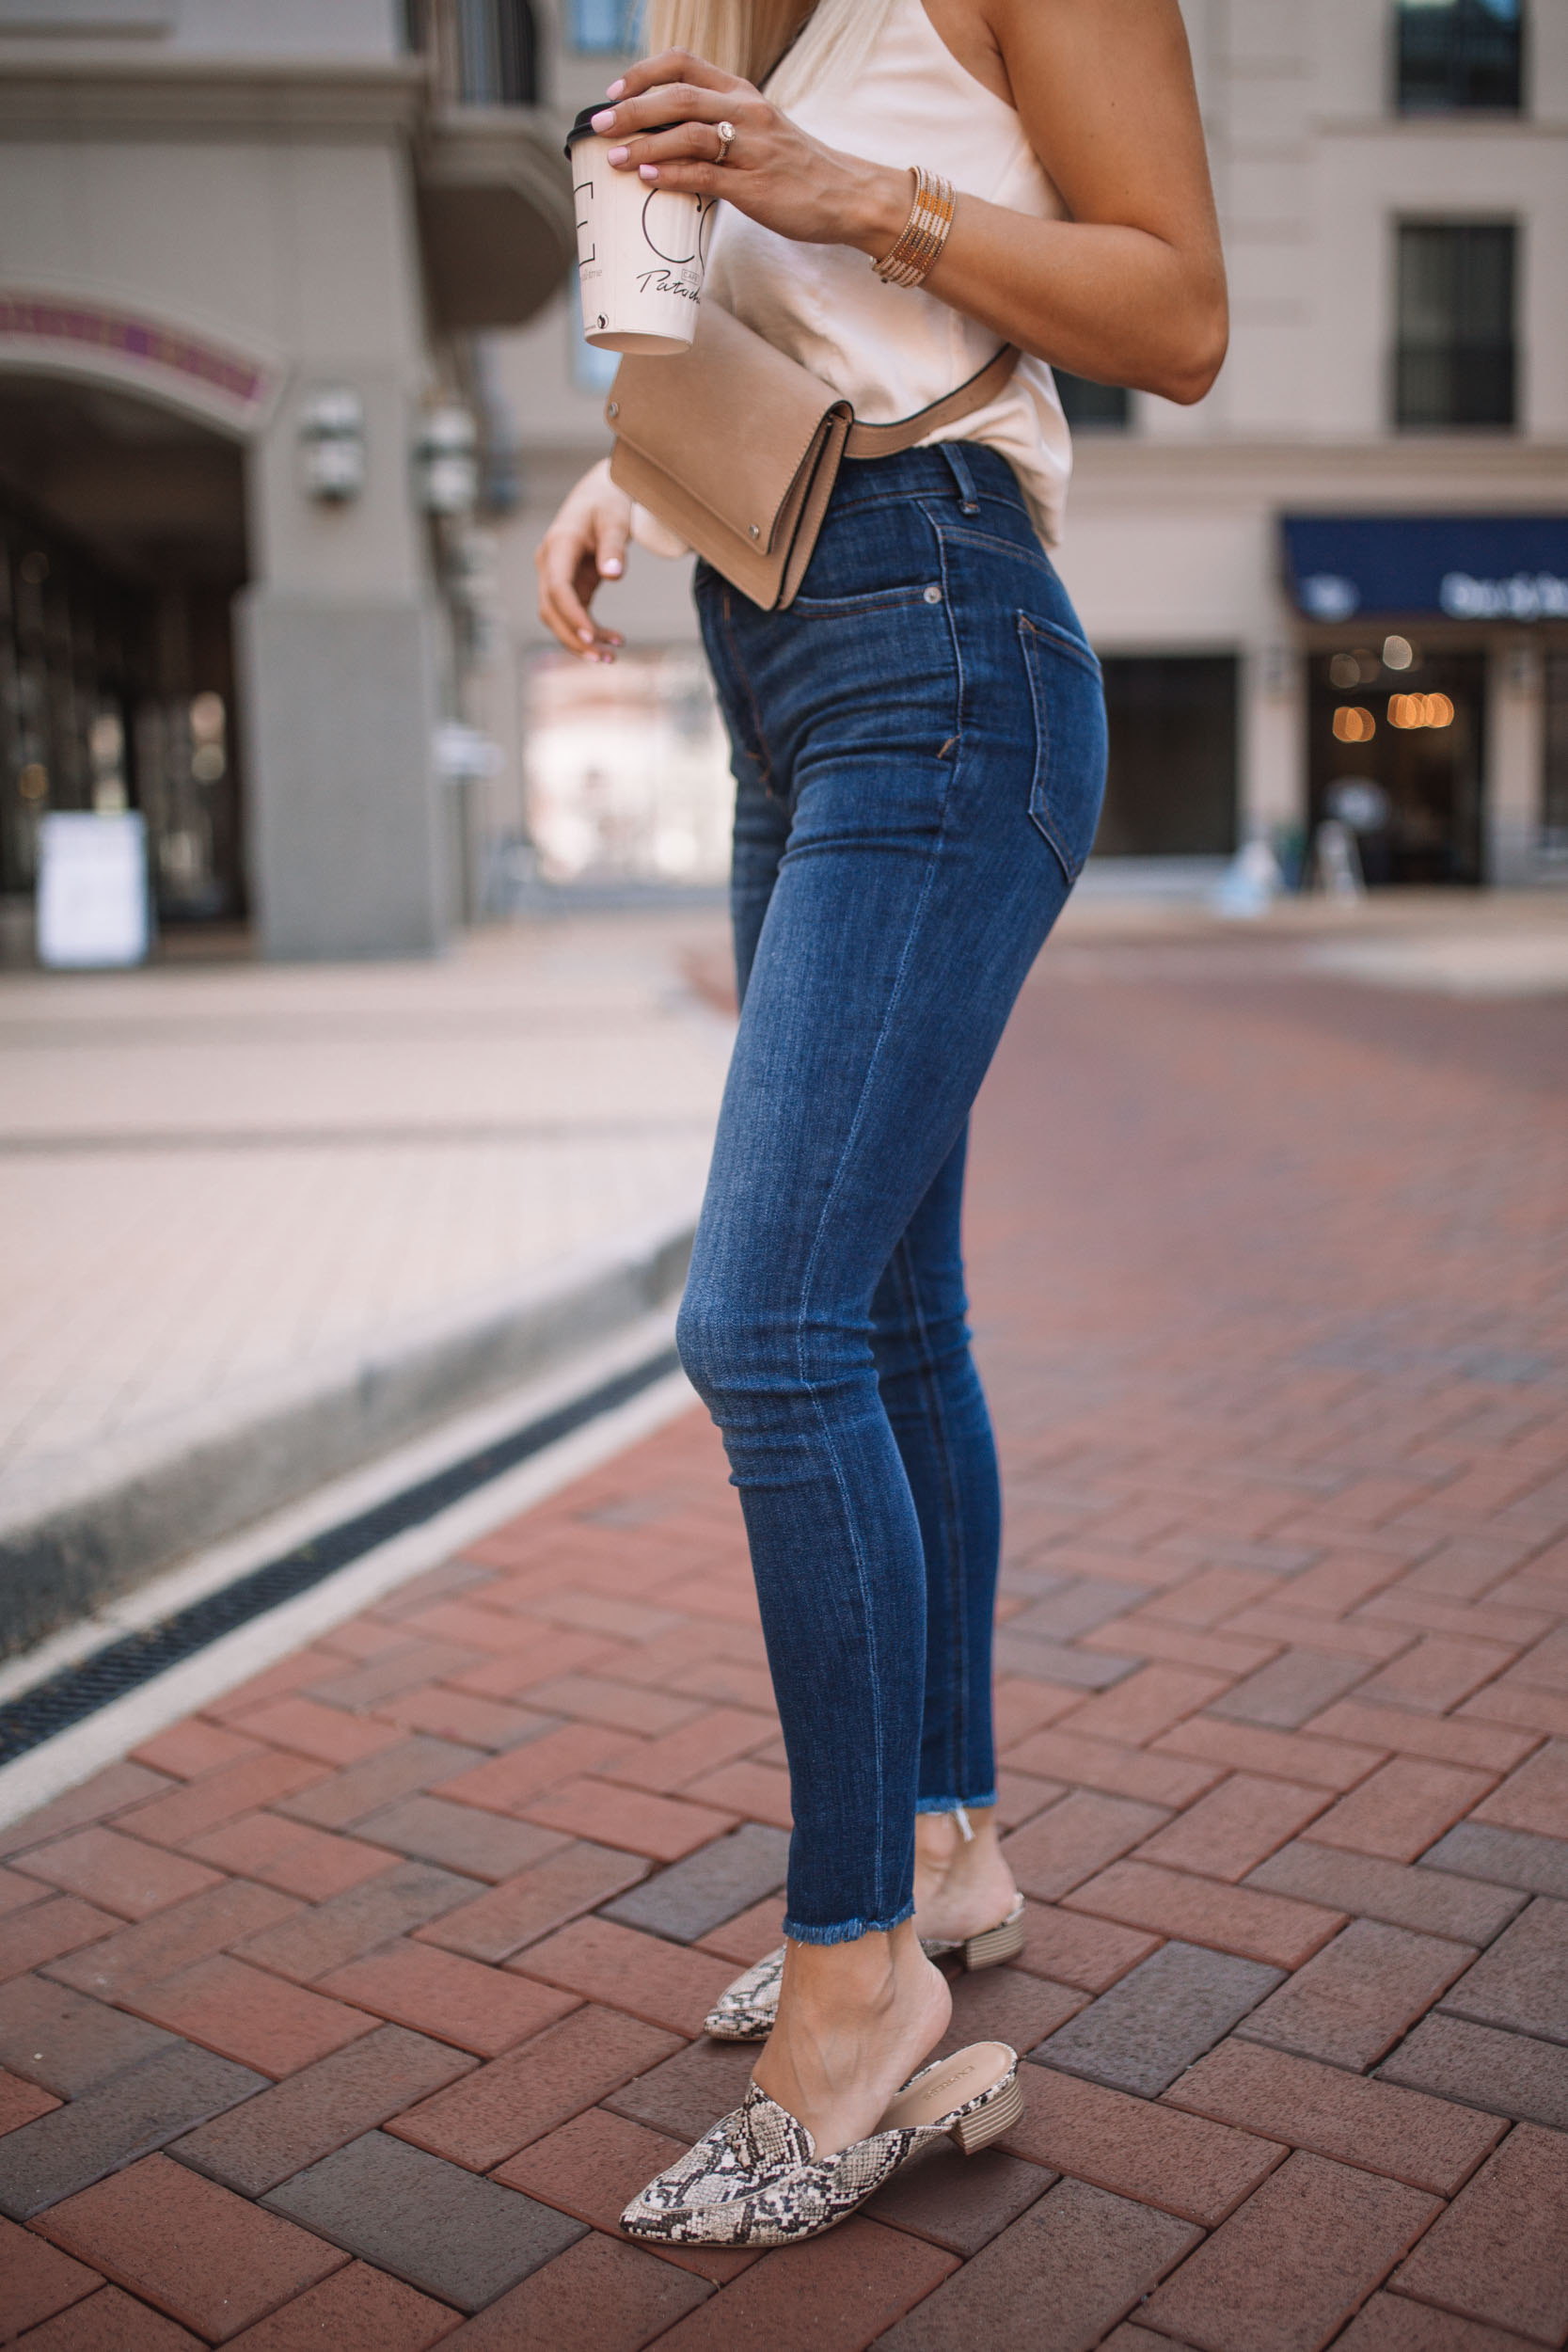 Express Jeans - Denim & Jeans